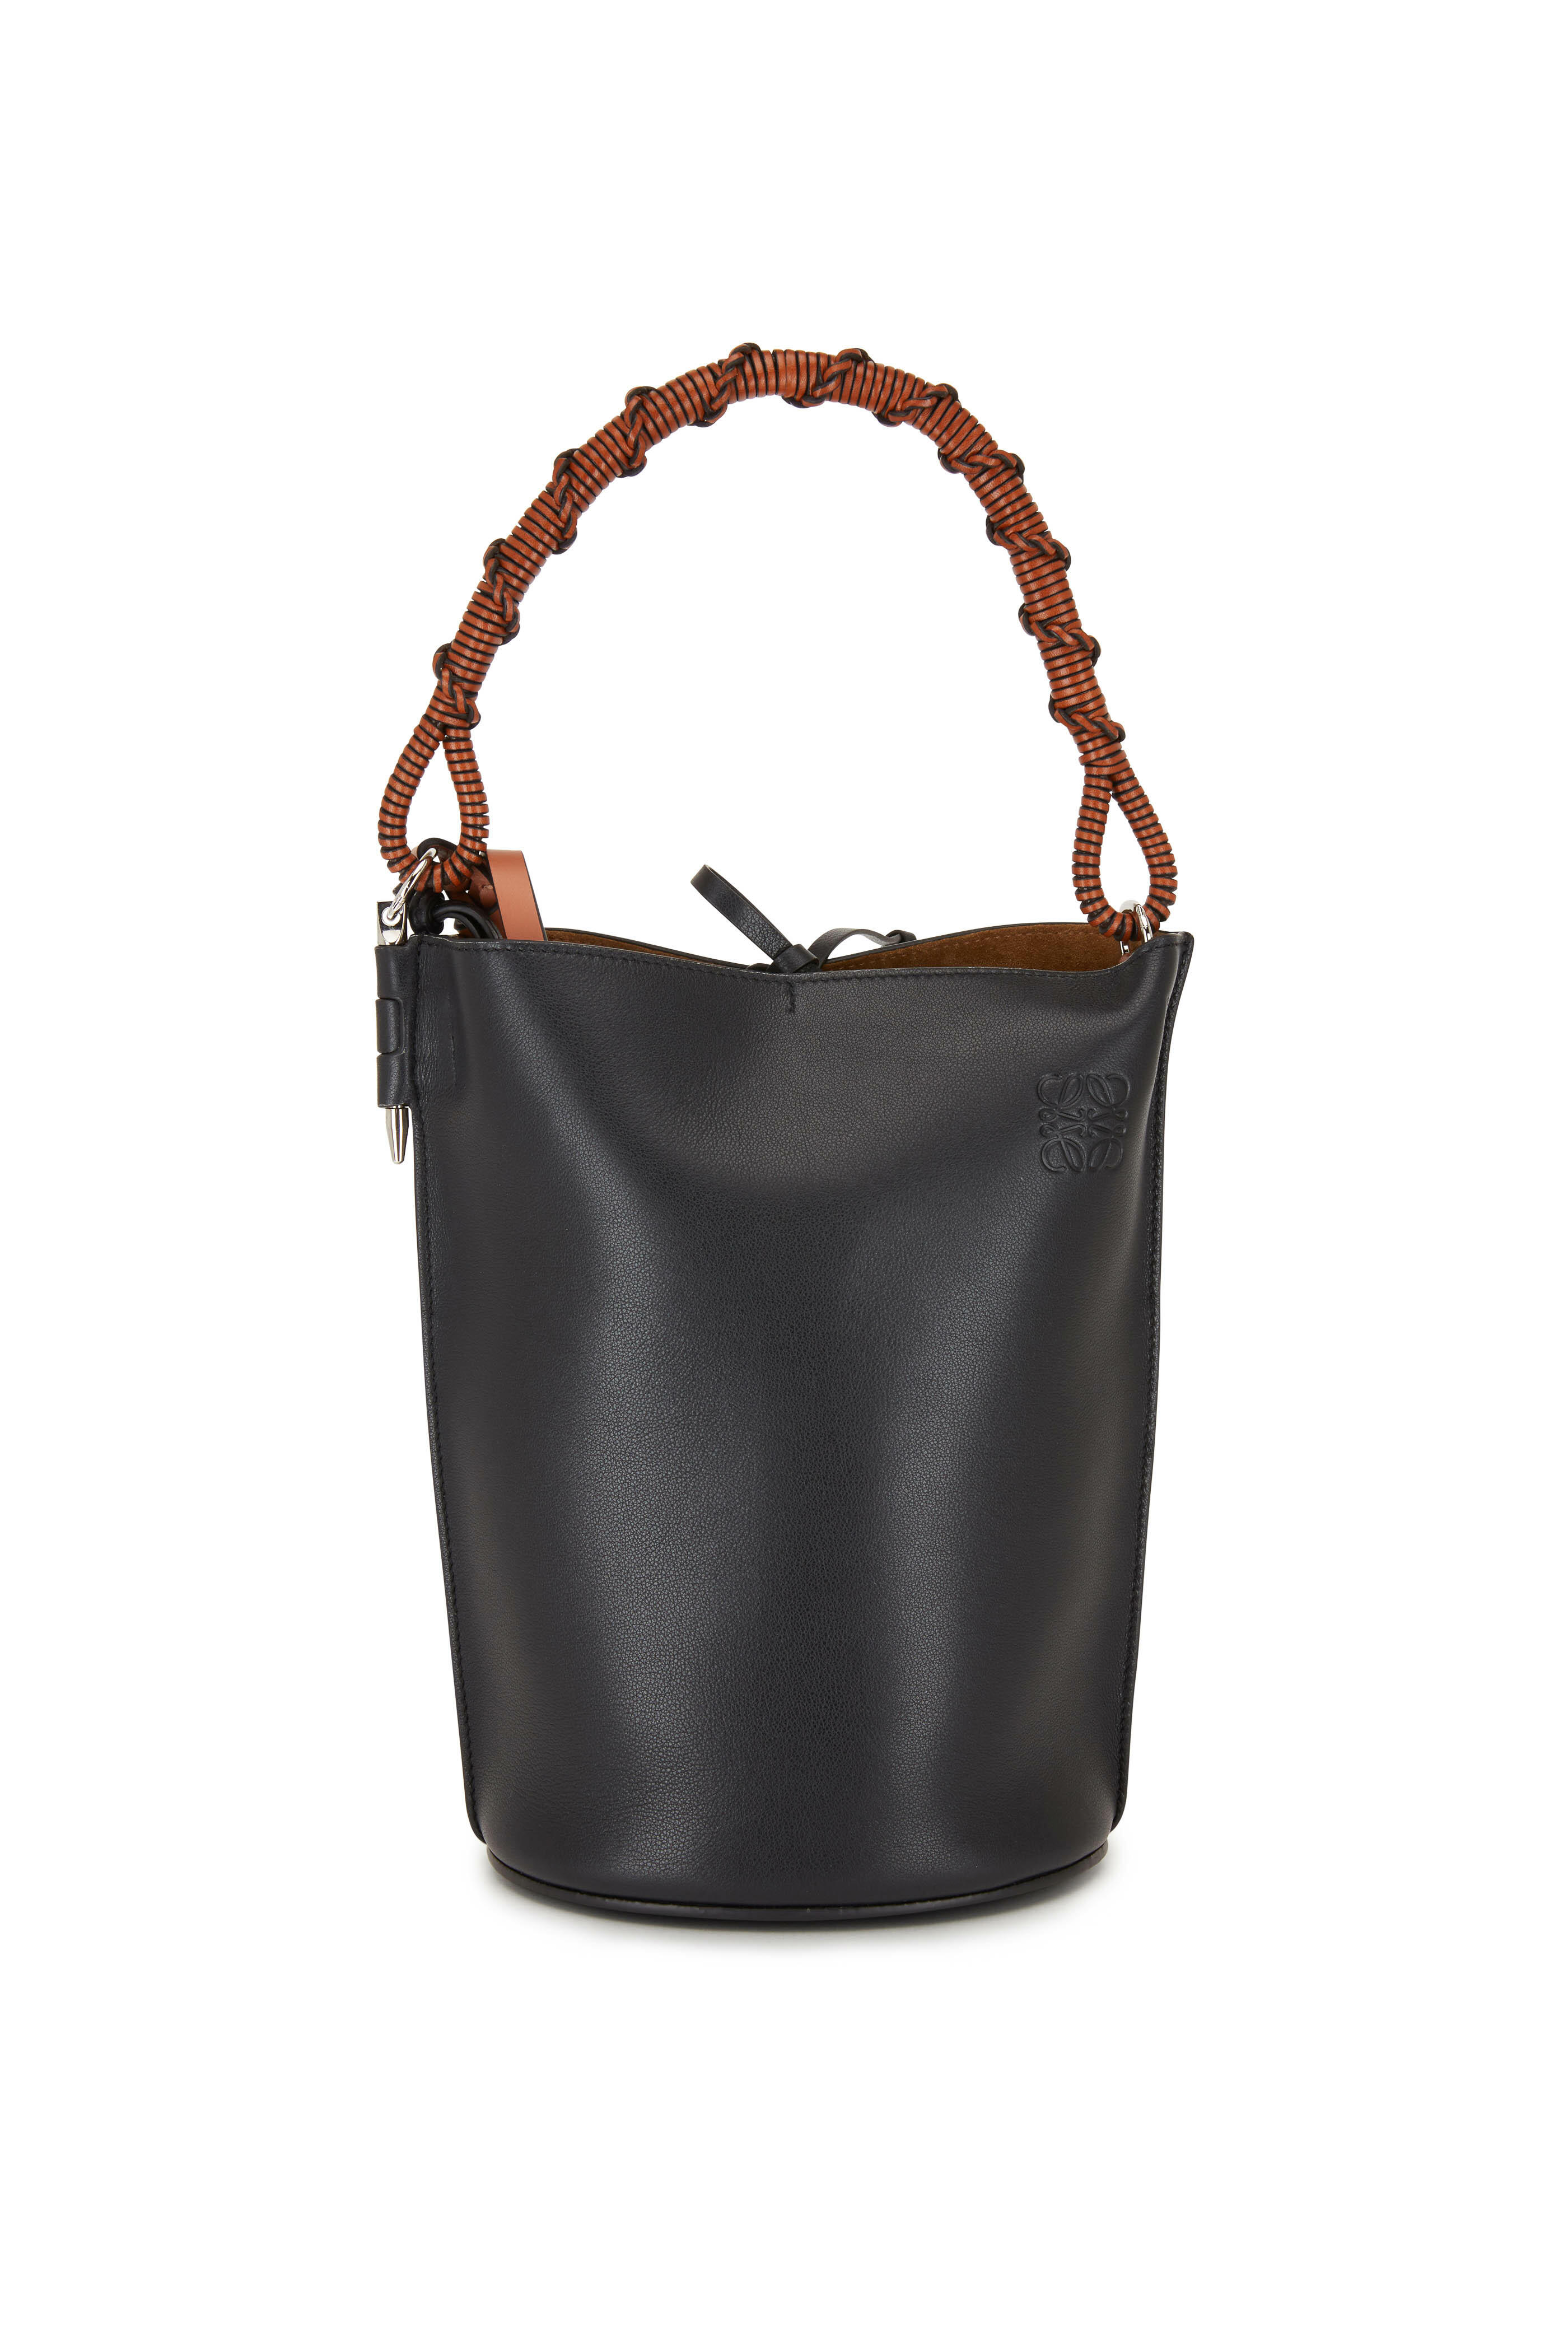 Loewe Woven-Strap Leather Bucket Bag in Brown